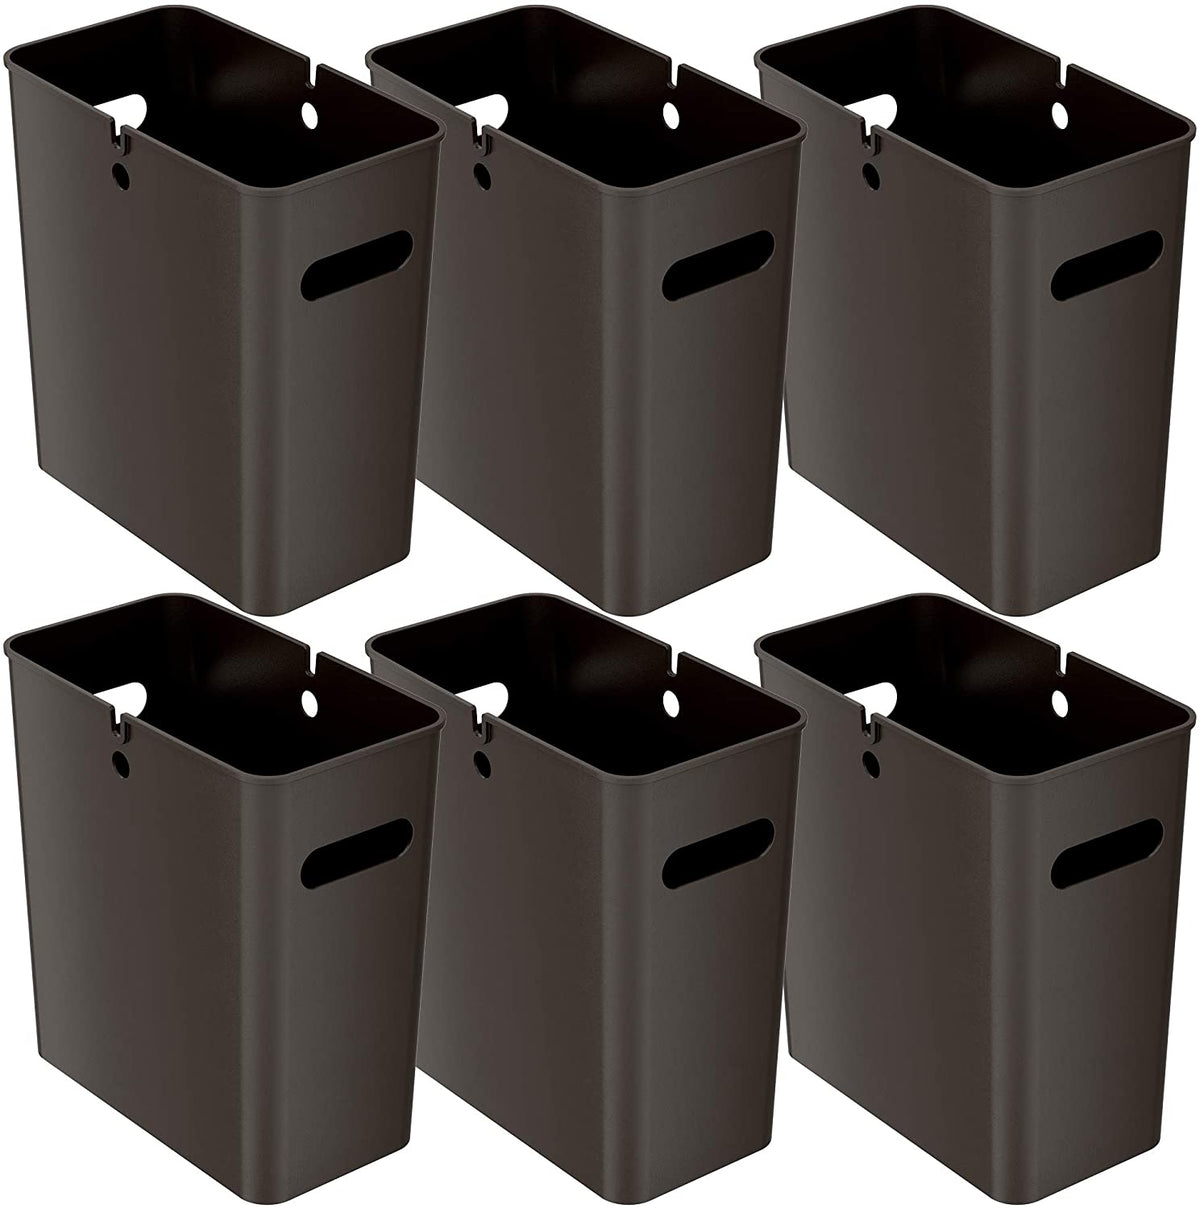 Black Small Storage Bin with Handles